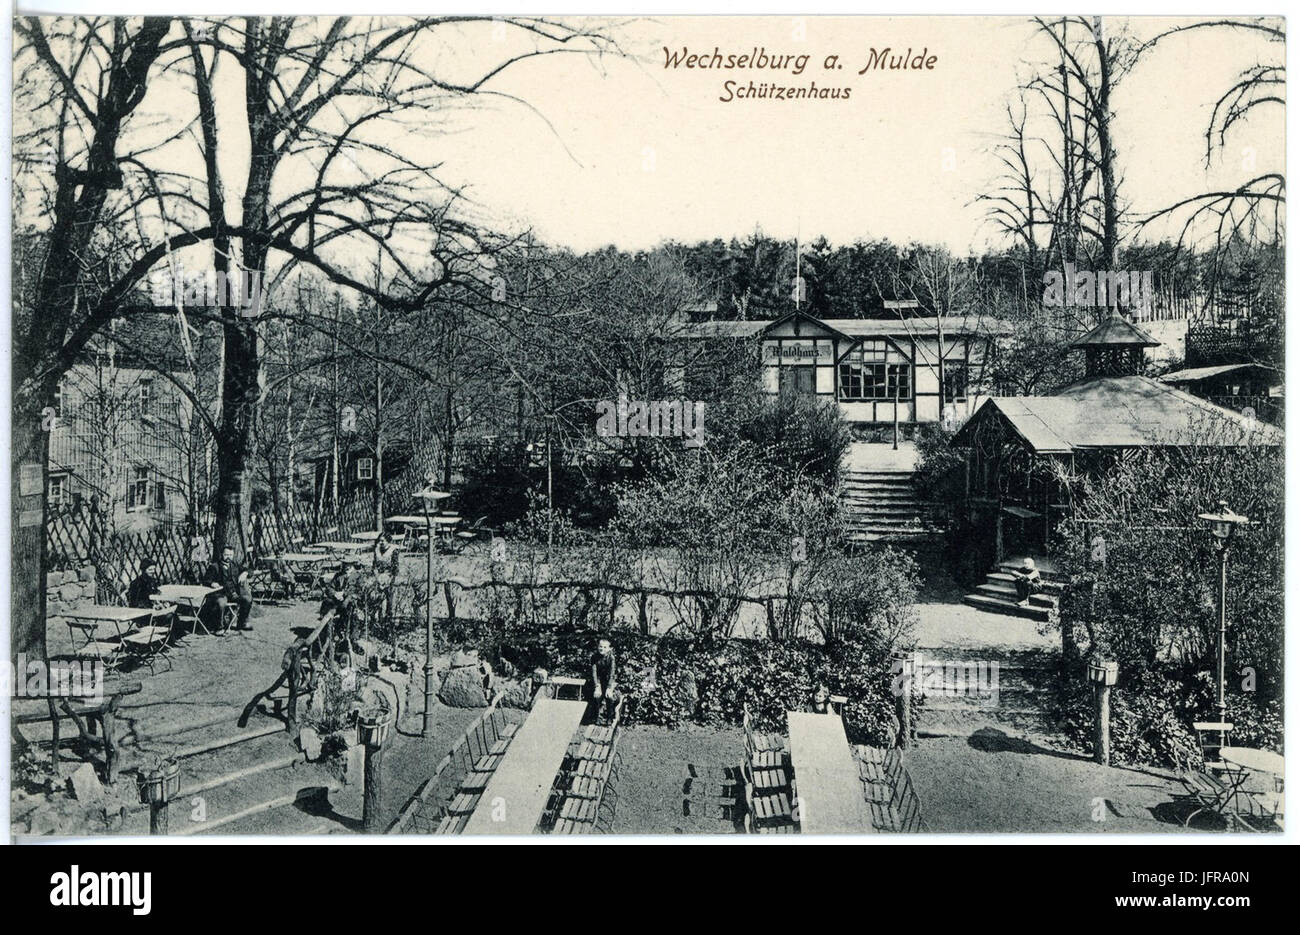 177 -Wechselburg-1914-Schützenhaus-Brück & Sohn Kunstverlag Stock Photo